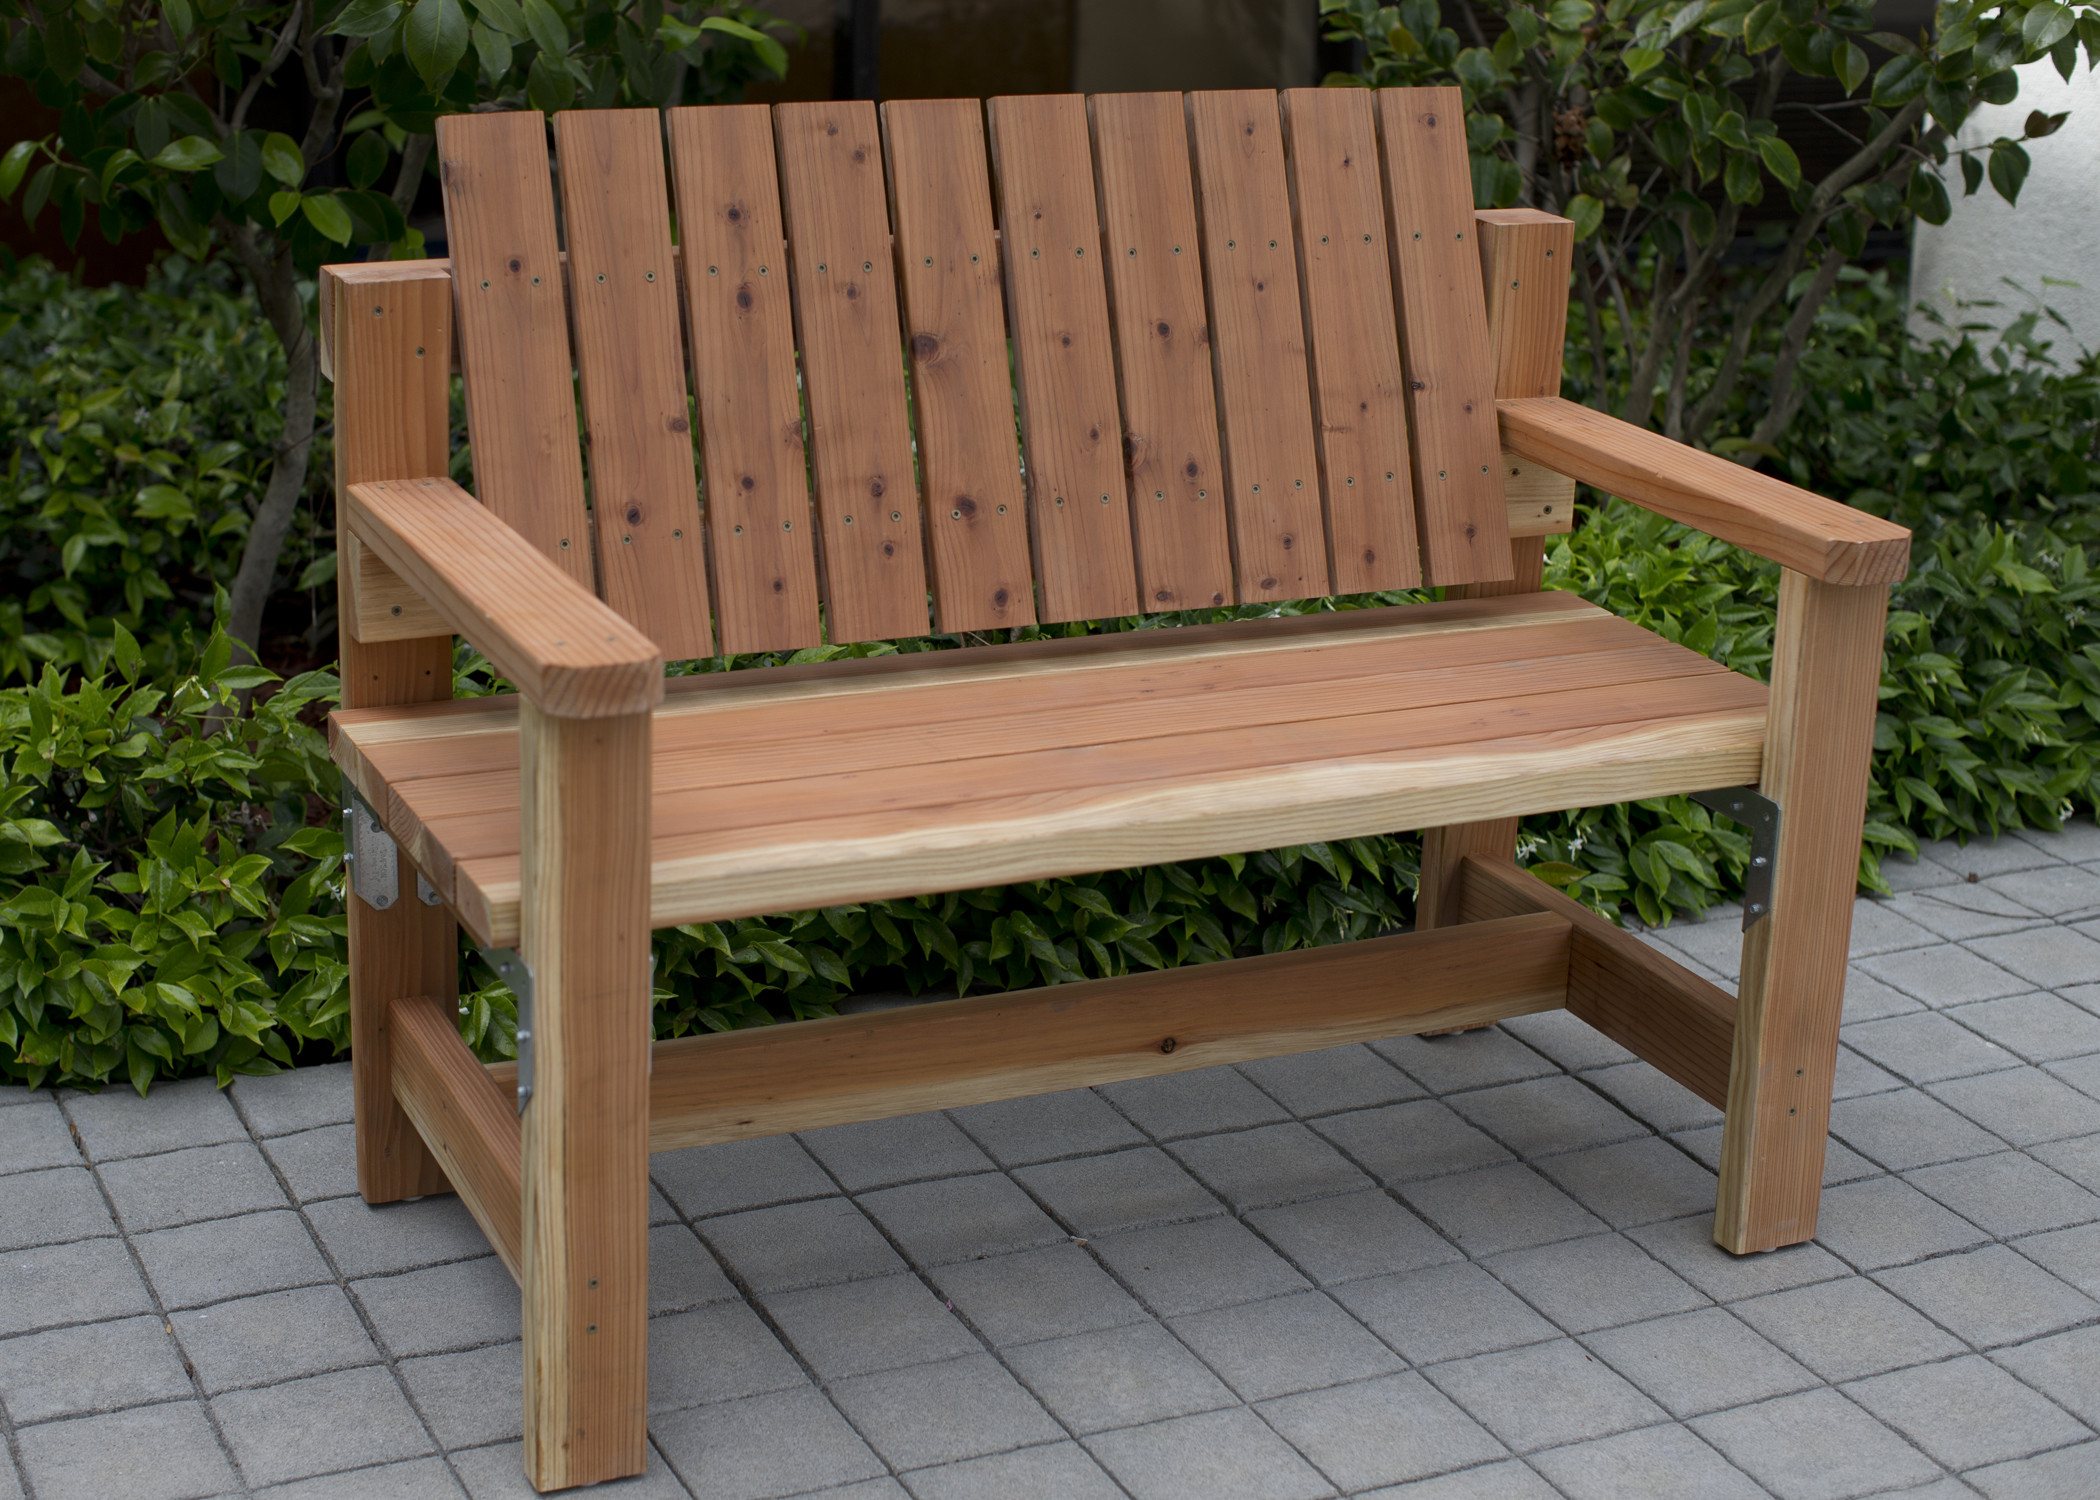 DIY Outdoor Wood Bench
 DIY Garden Bench Preview DIY Done Right